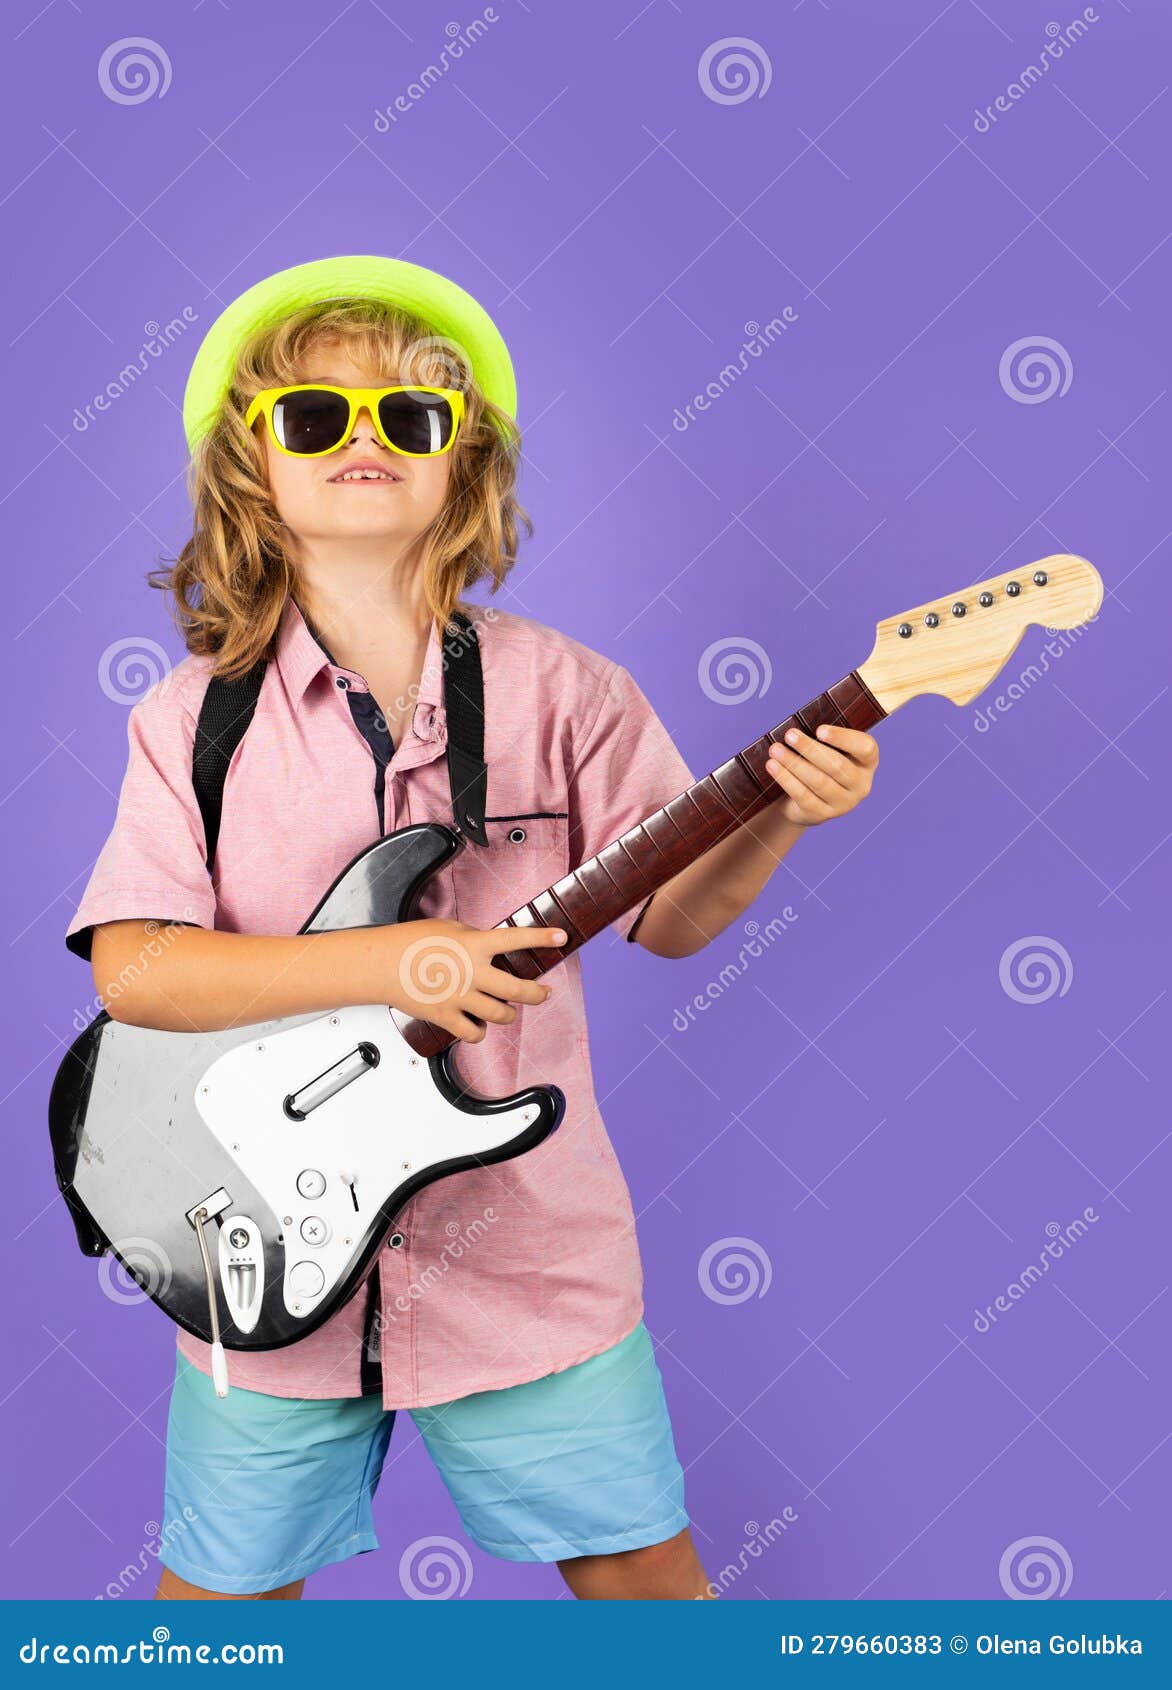 Fashion American Country Boy Playing Music. Portrait of Cute Child Boy ...